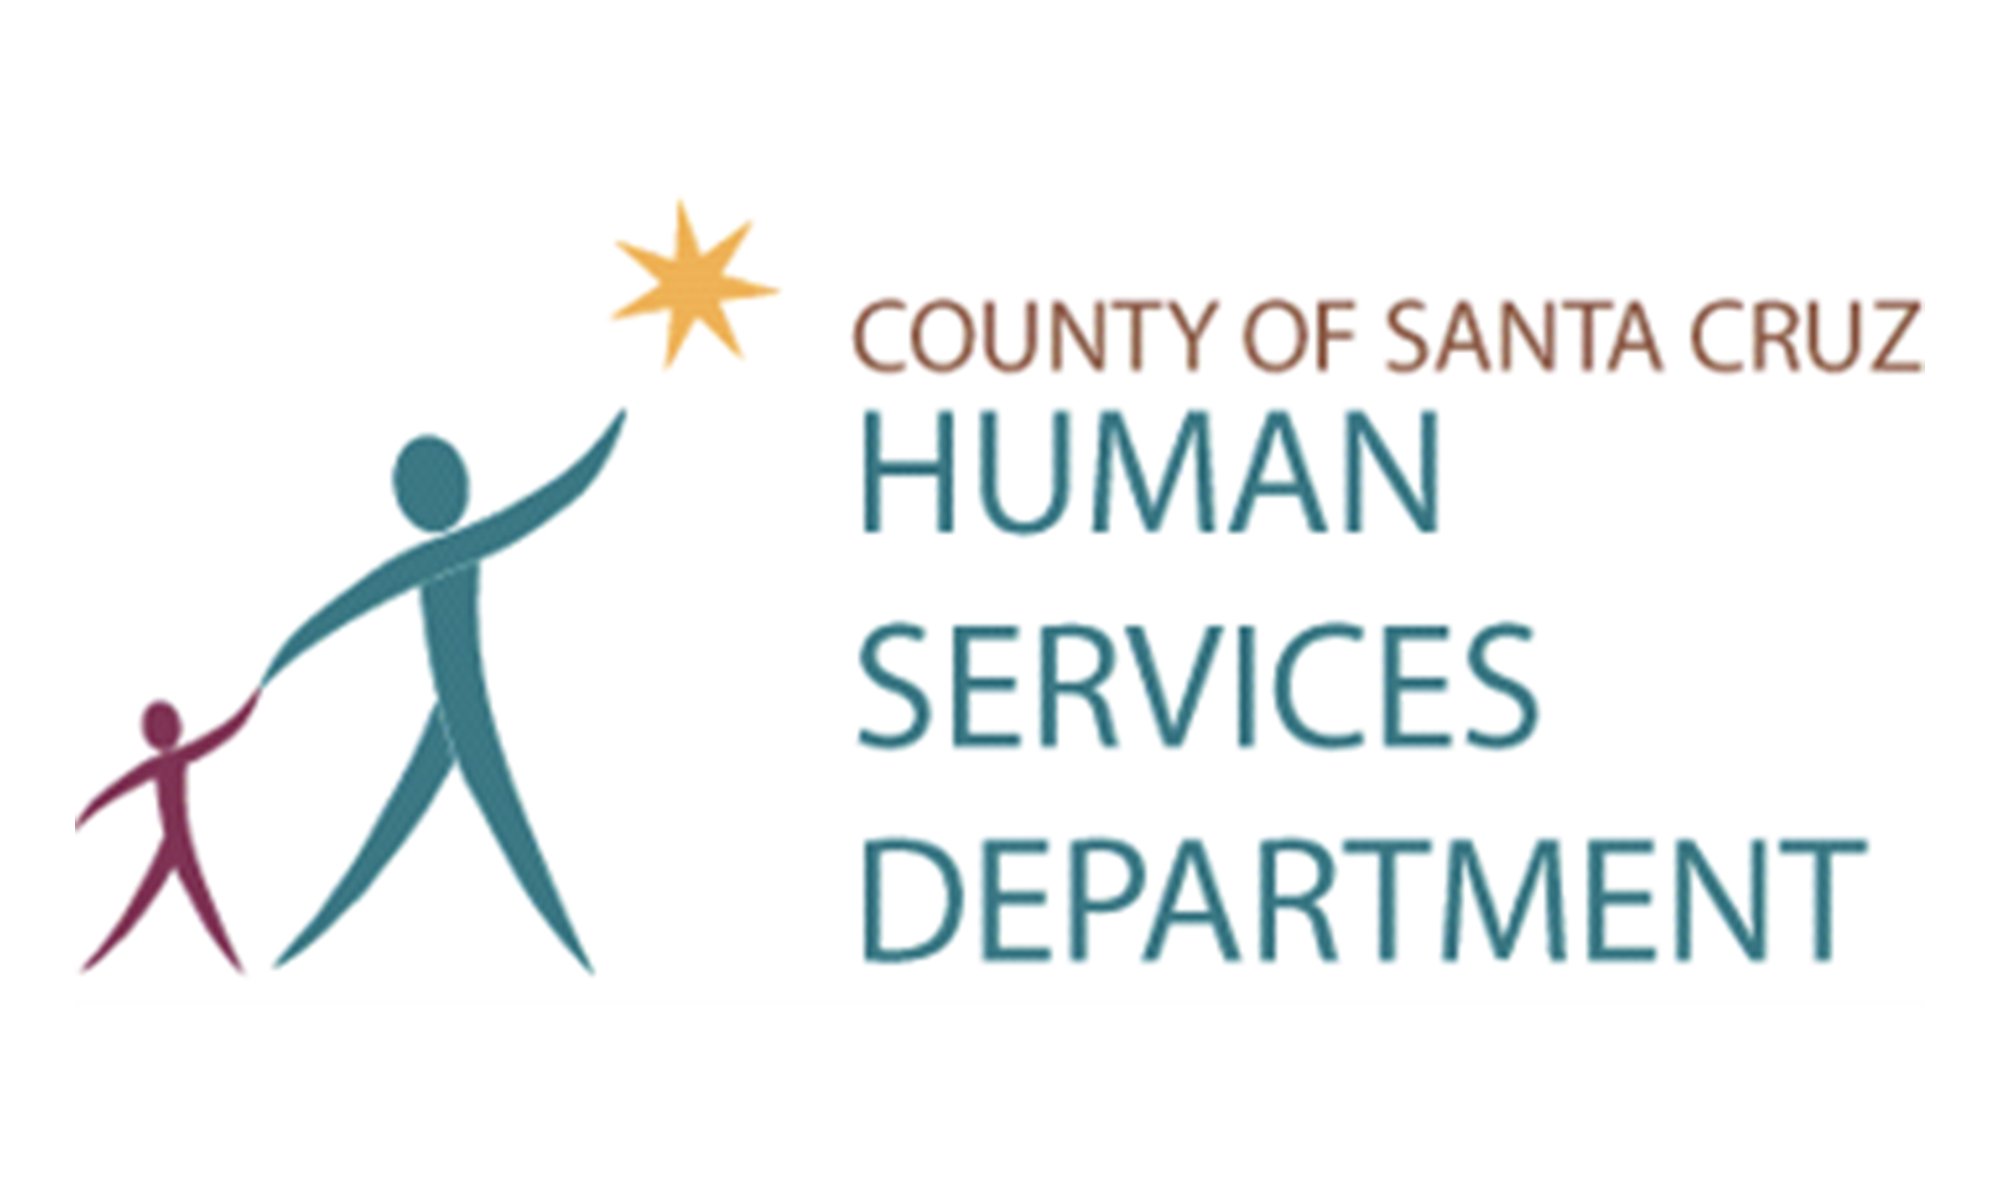 County of Santa Cruz Human Services Department